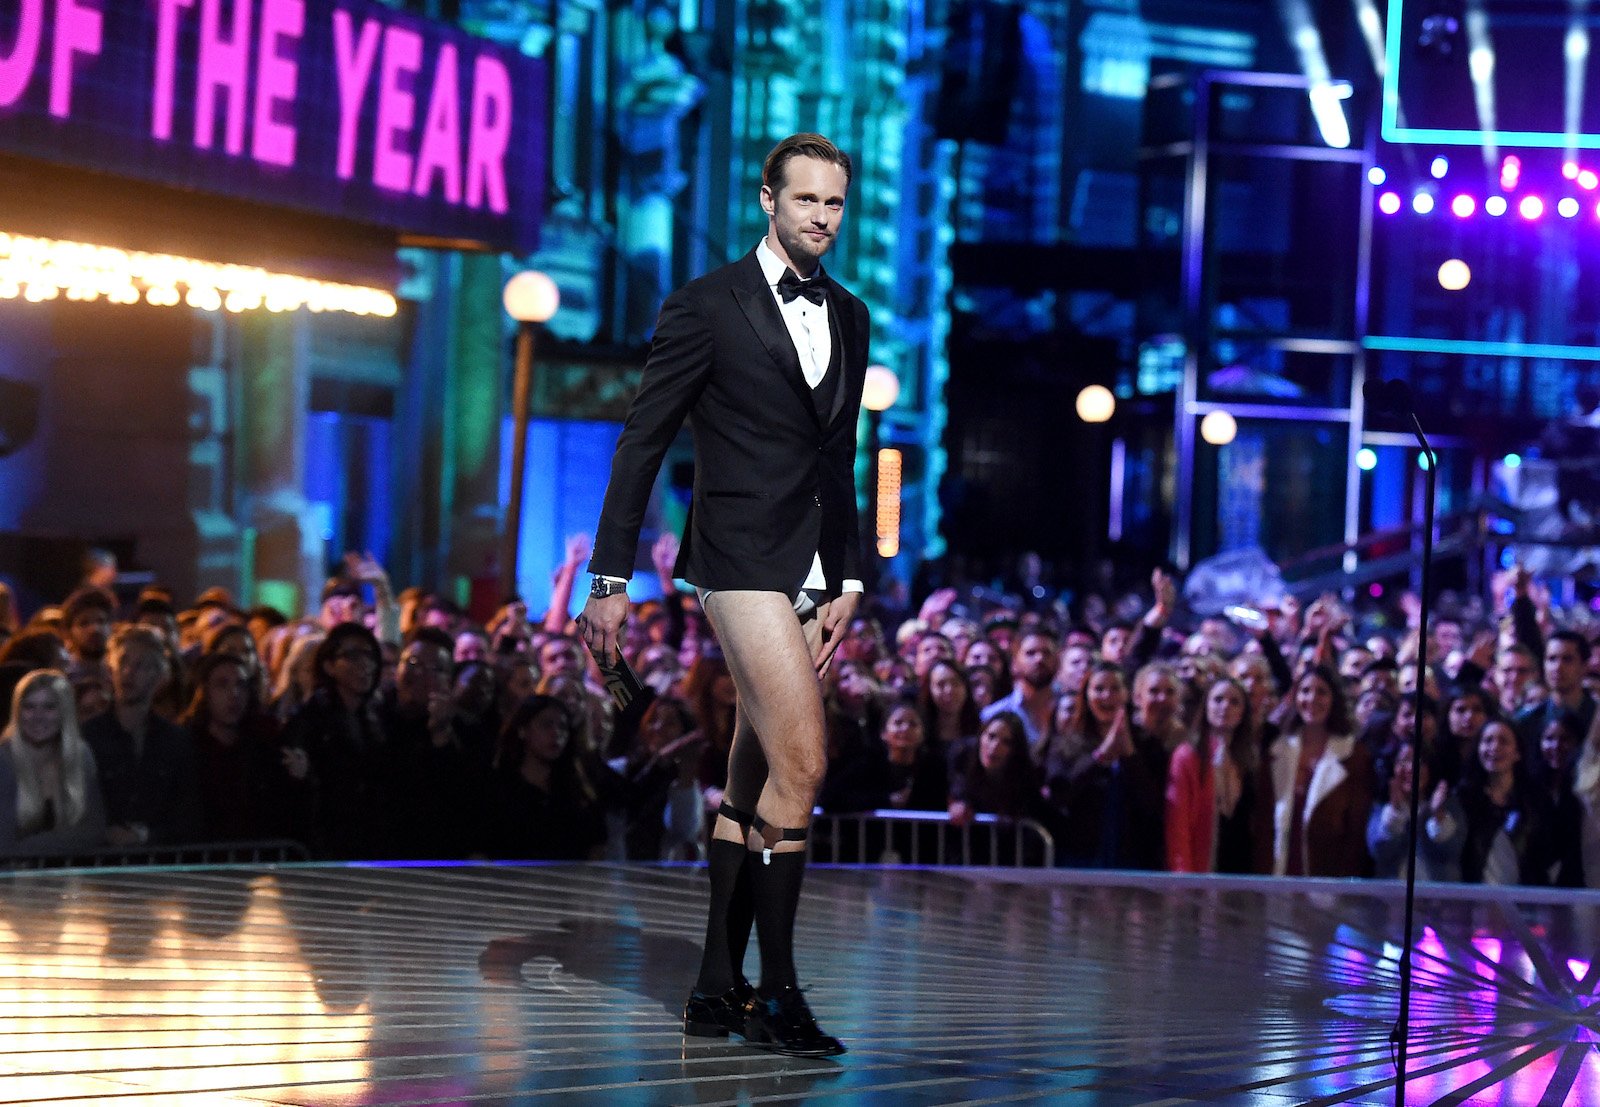 Alexander Skarsgard struts onstage pantless during the 2016 MTV Movie Awards